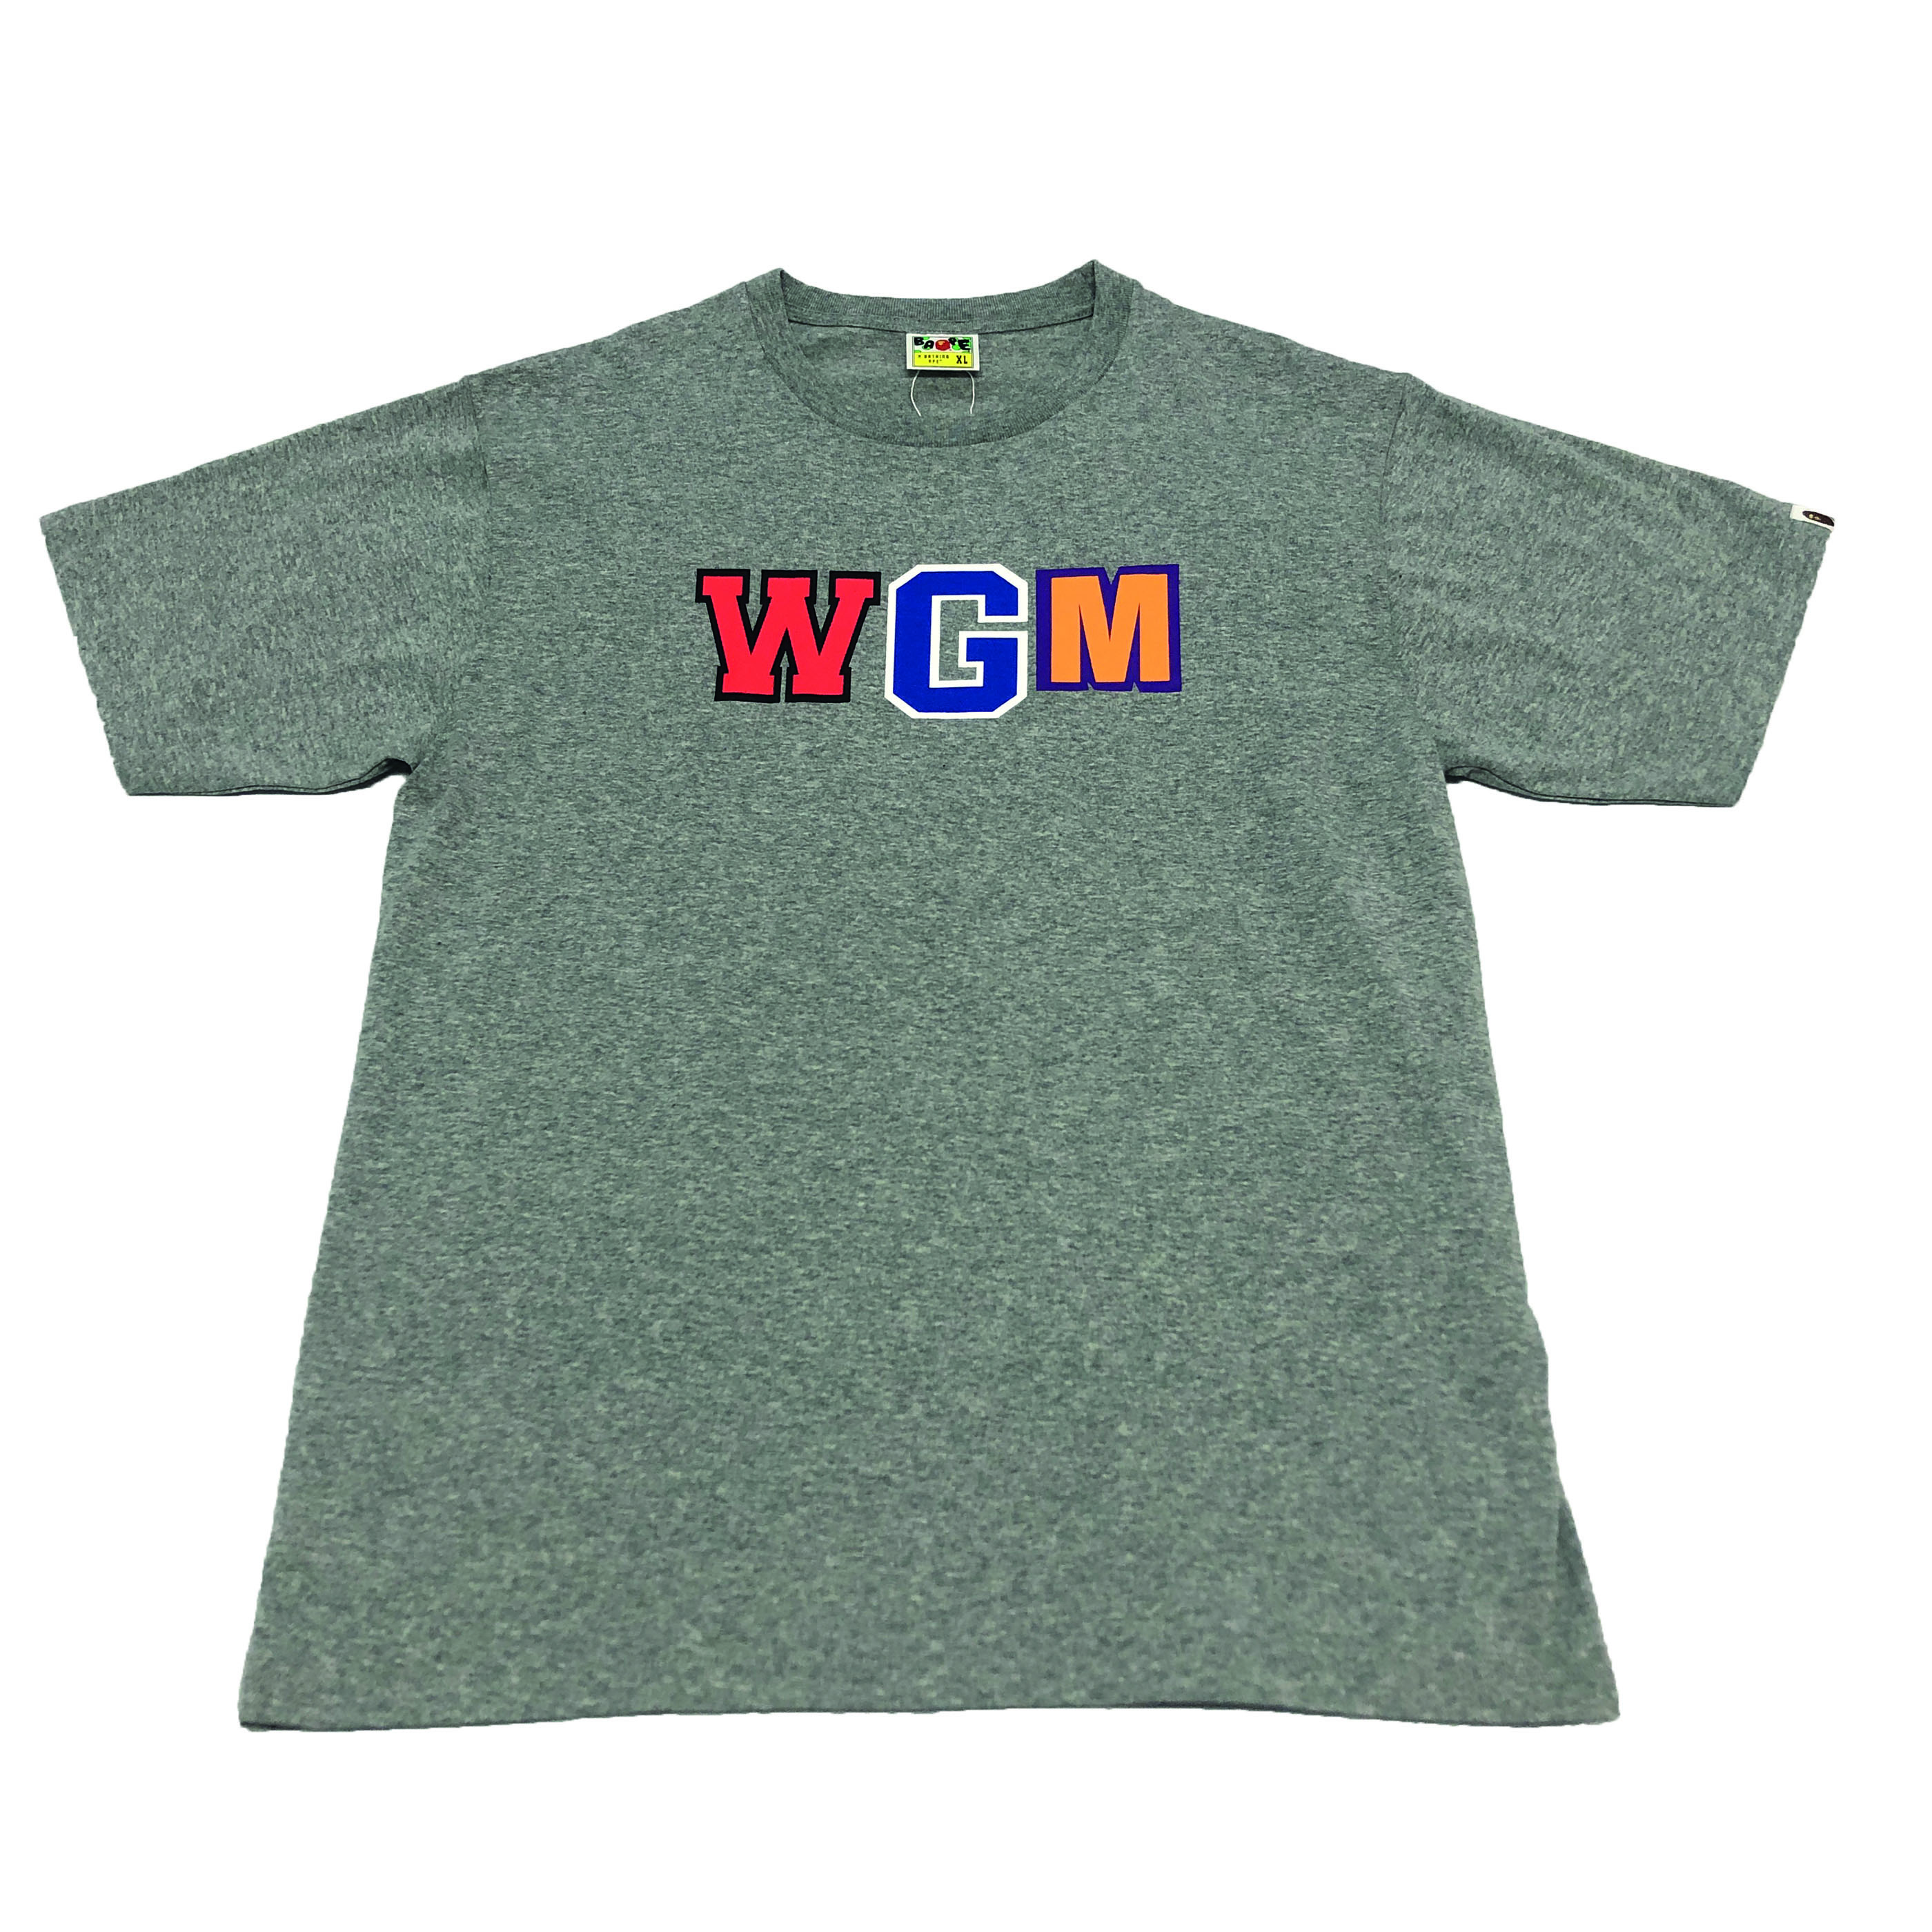 [Bape]YGM Shark T-shirt - Size XL